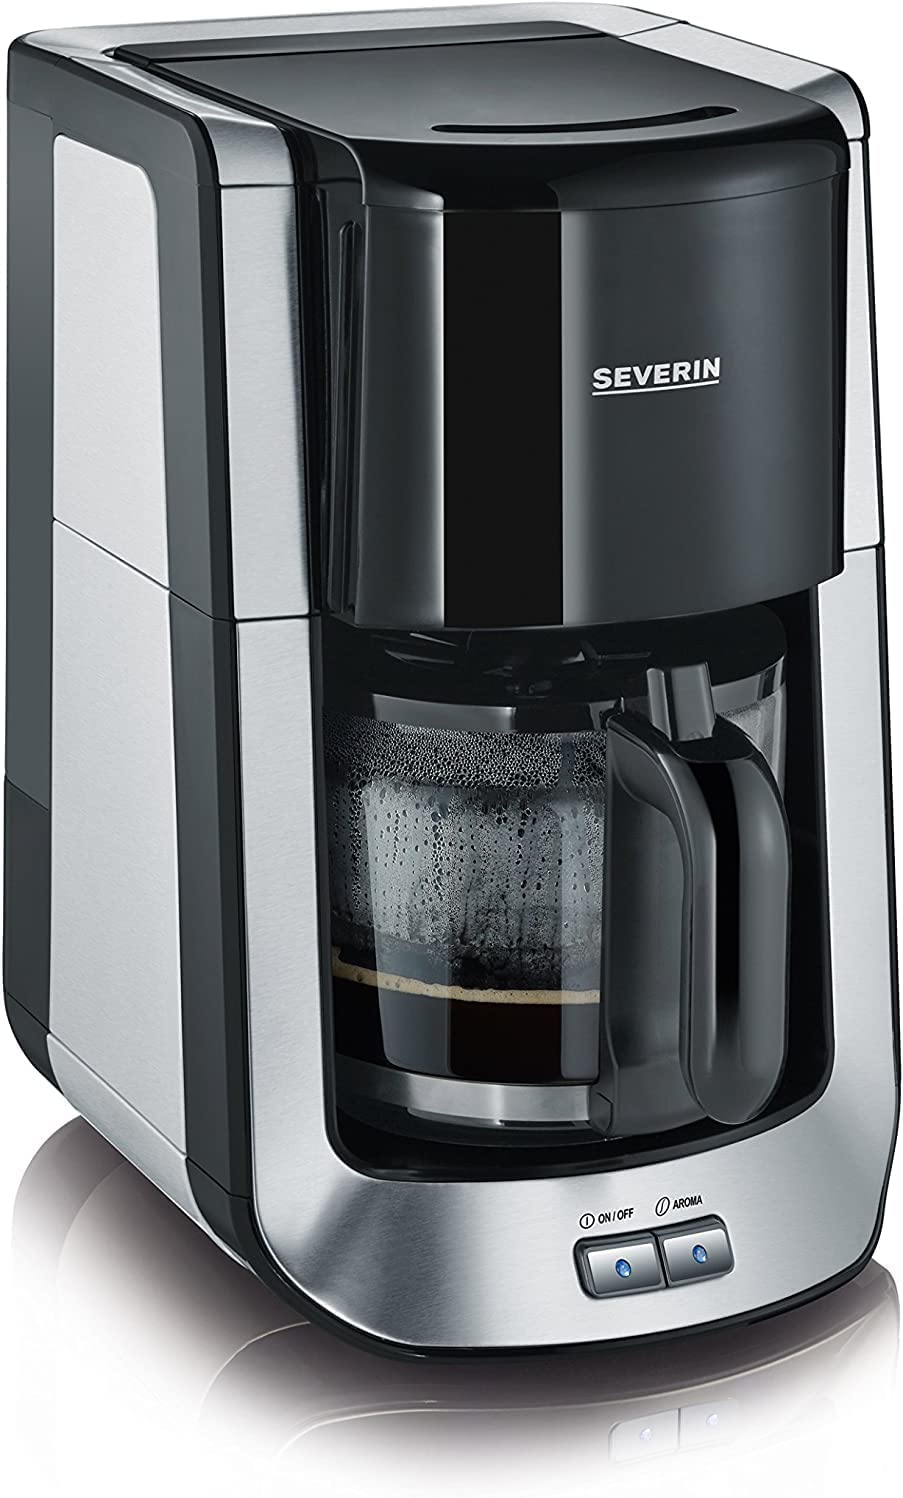 Severin KA 4462 Coffee Machine, Brushed Stainless Steel/Black